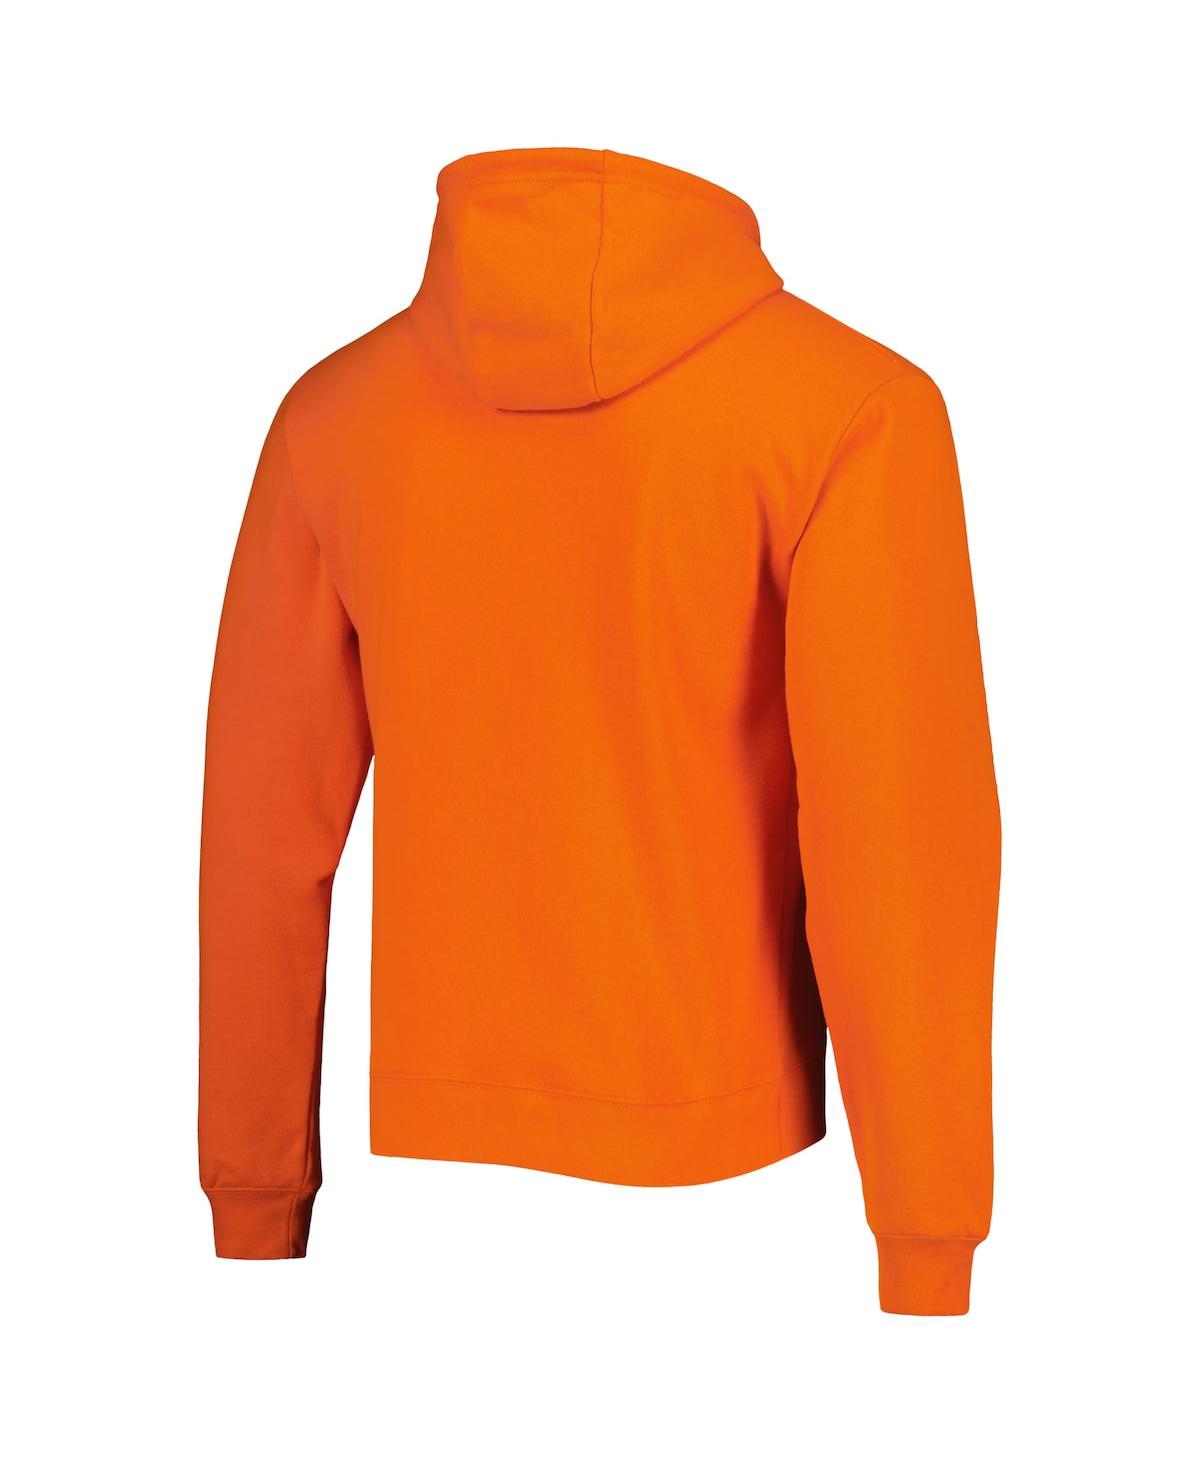 Shop League Collegiate Wear Men's  Orange Clemson Tigers Arch Essential Fleece Pullover Hoodie